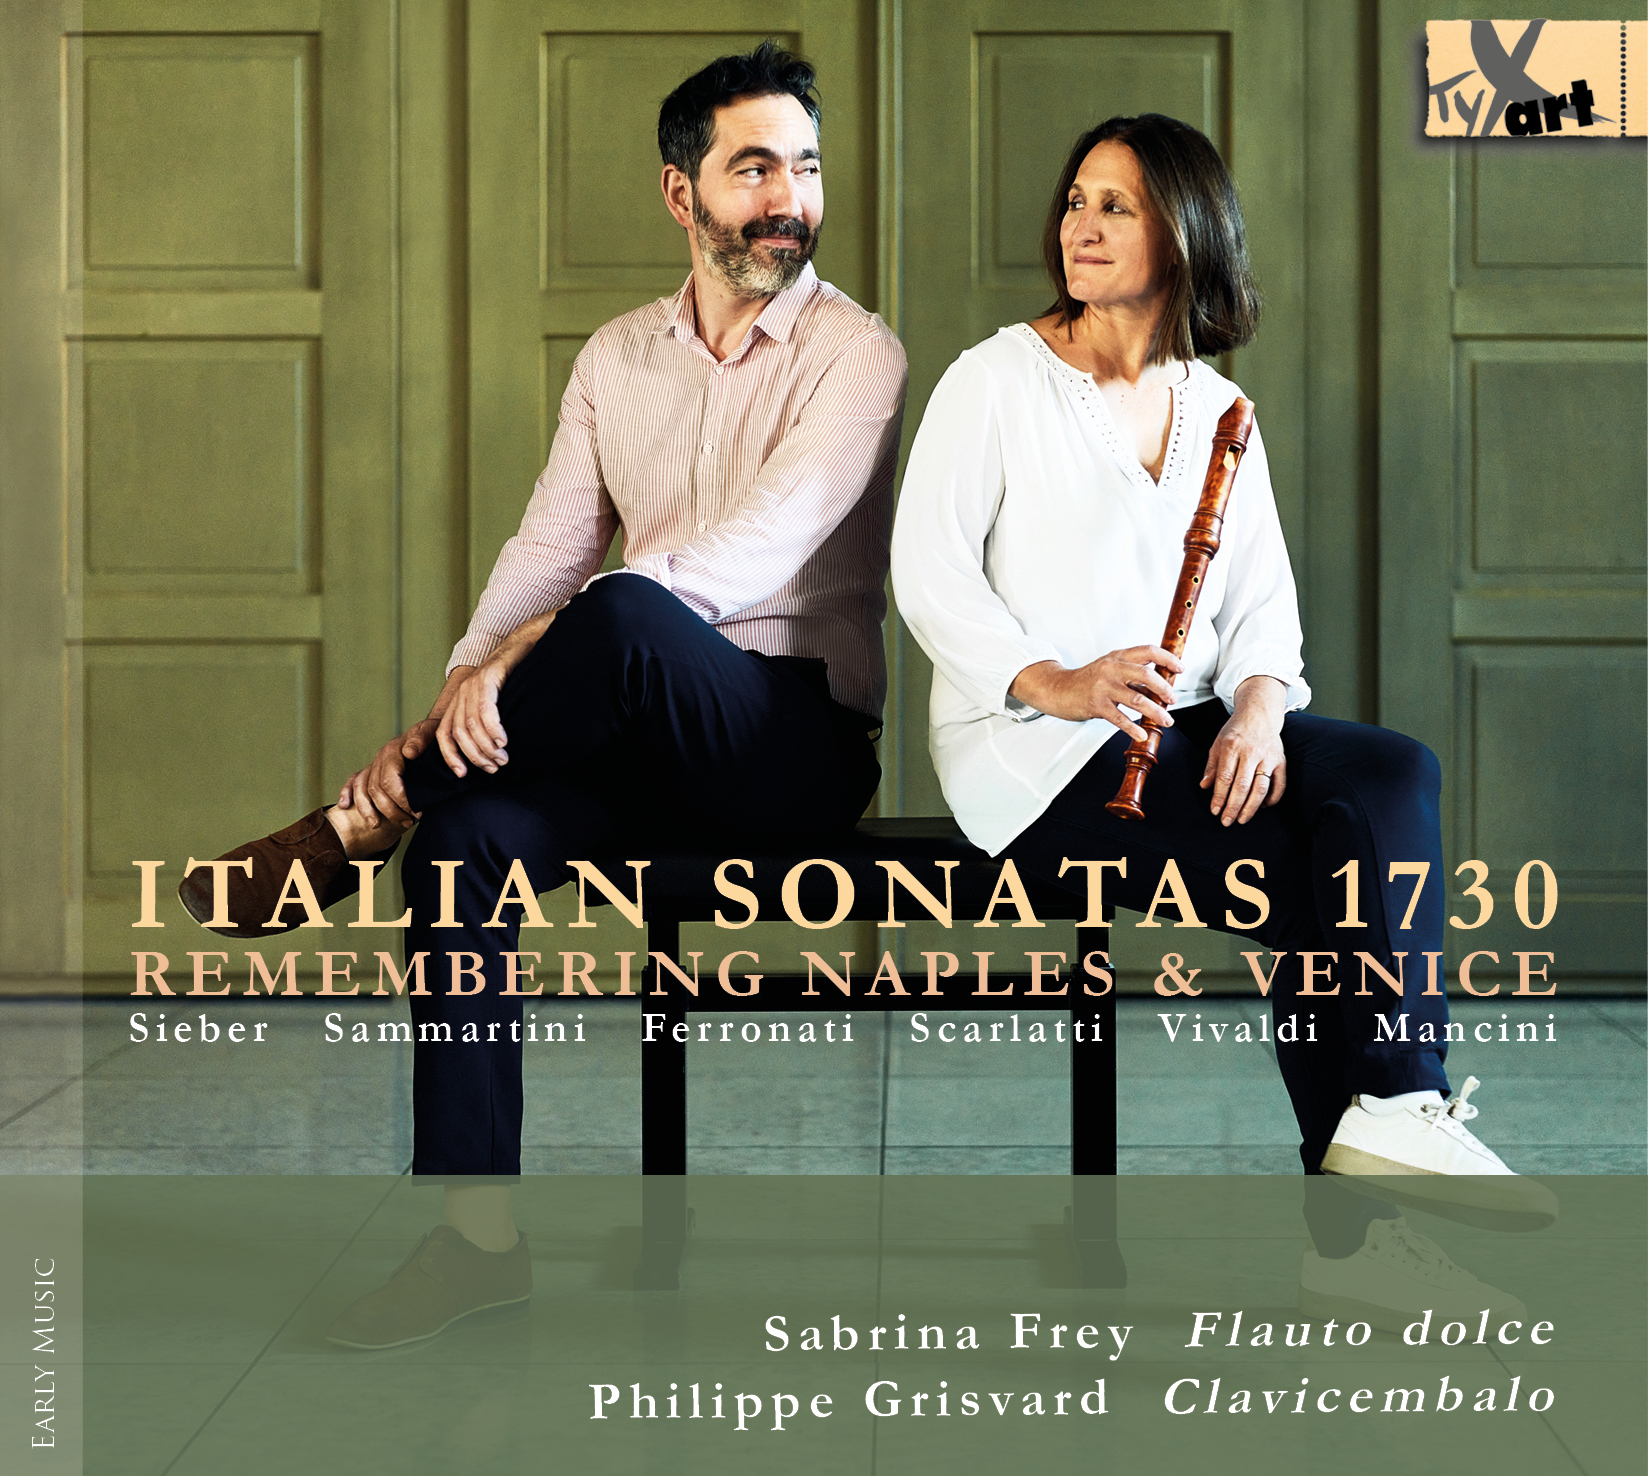 Italian Sonatas 1730 - Sabrina Frey und Philippe Grisvard